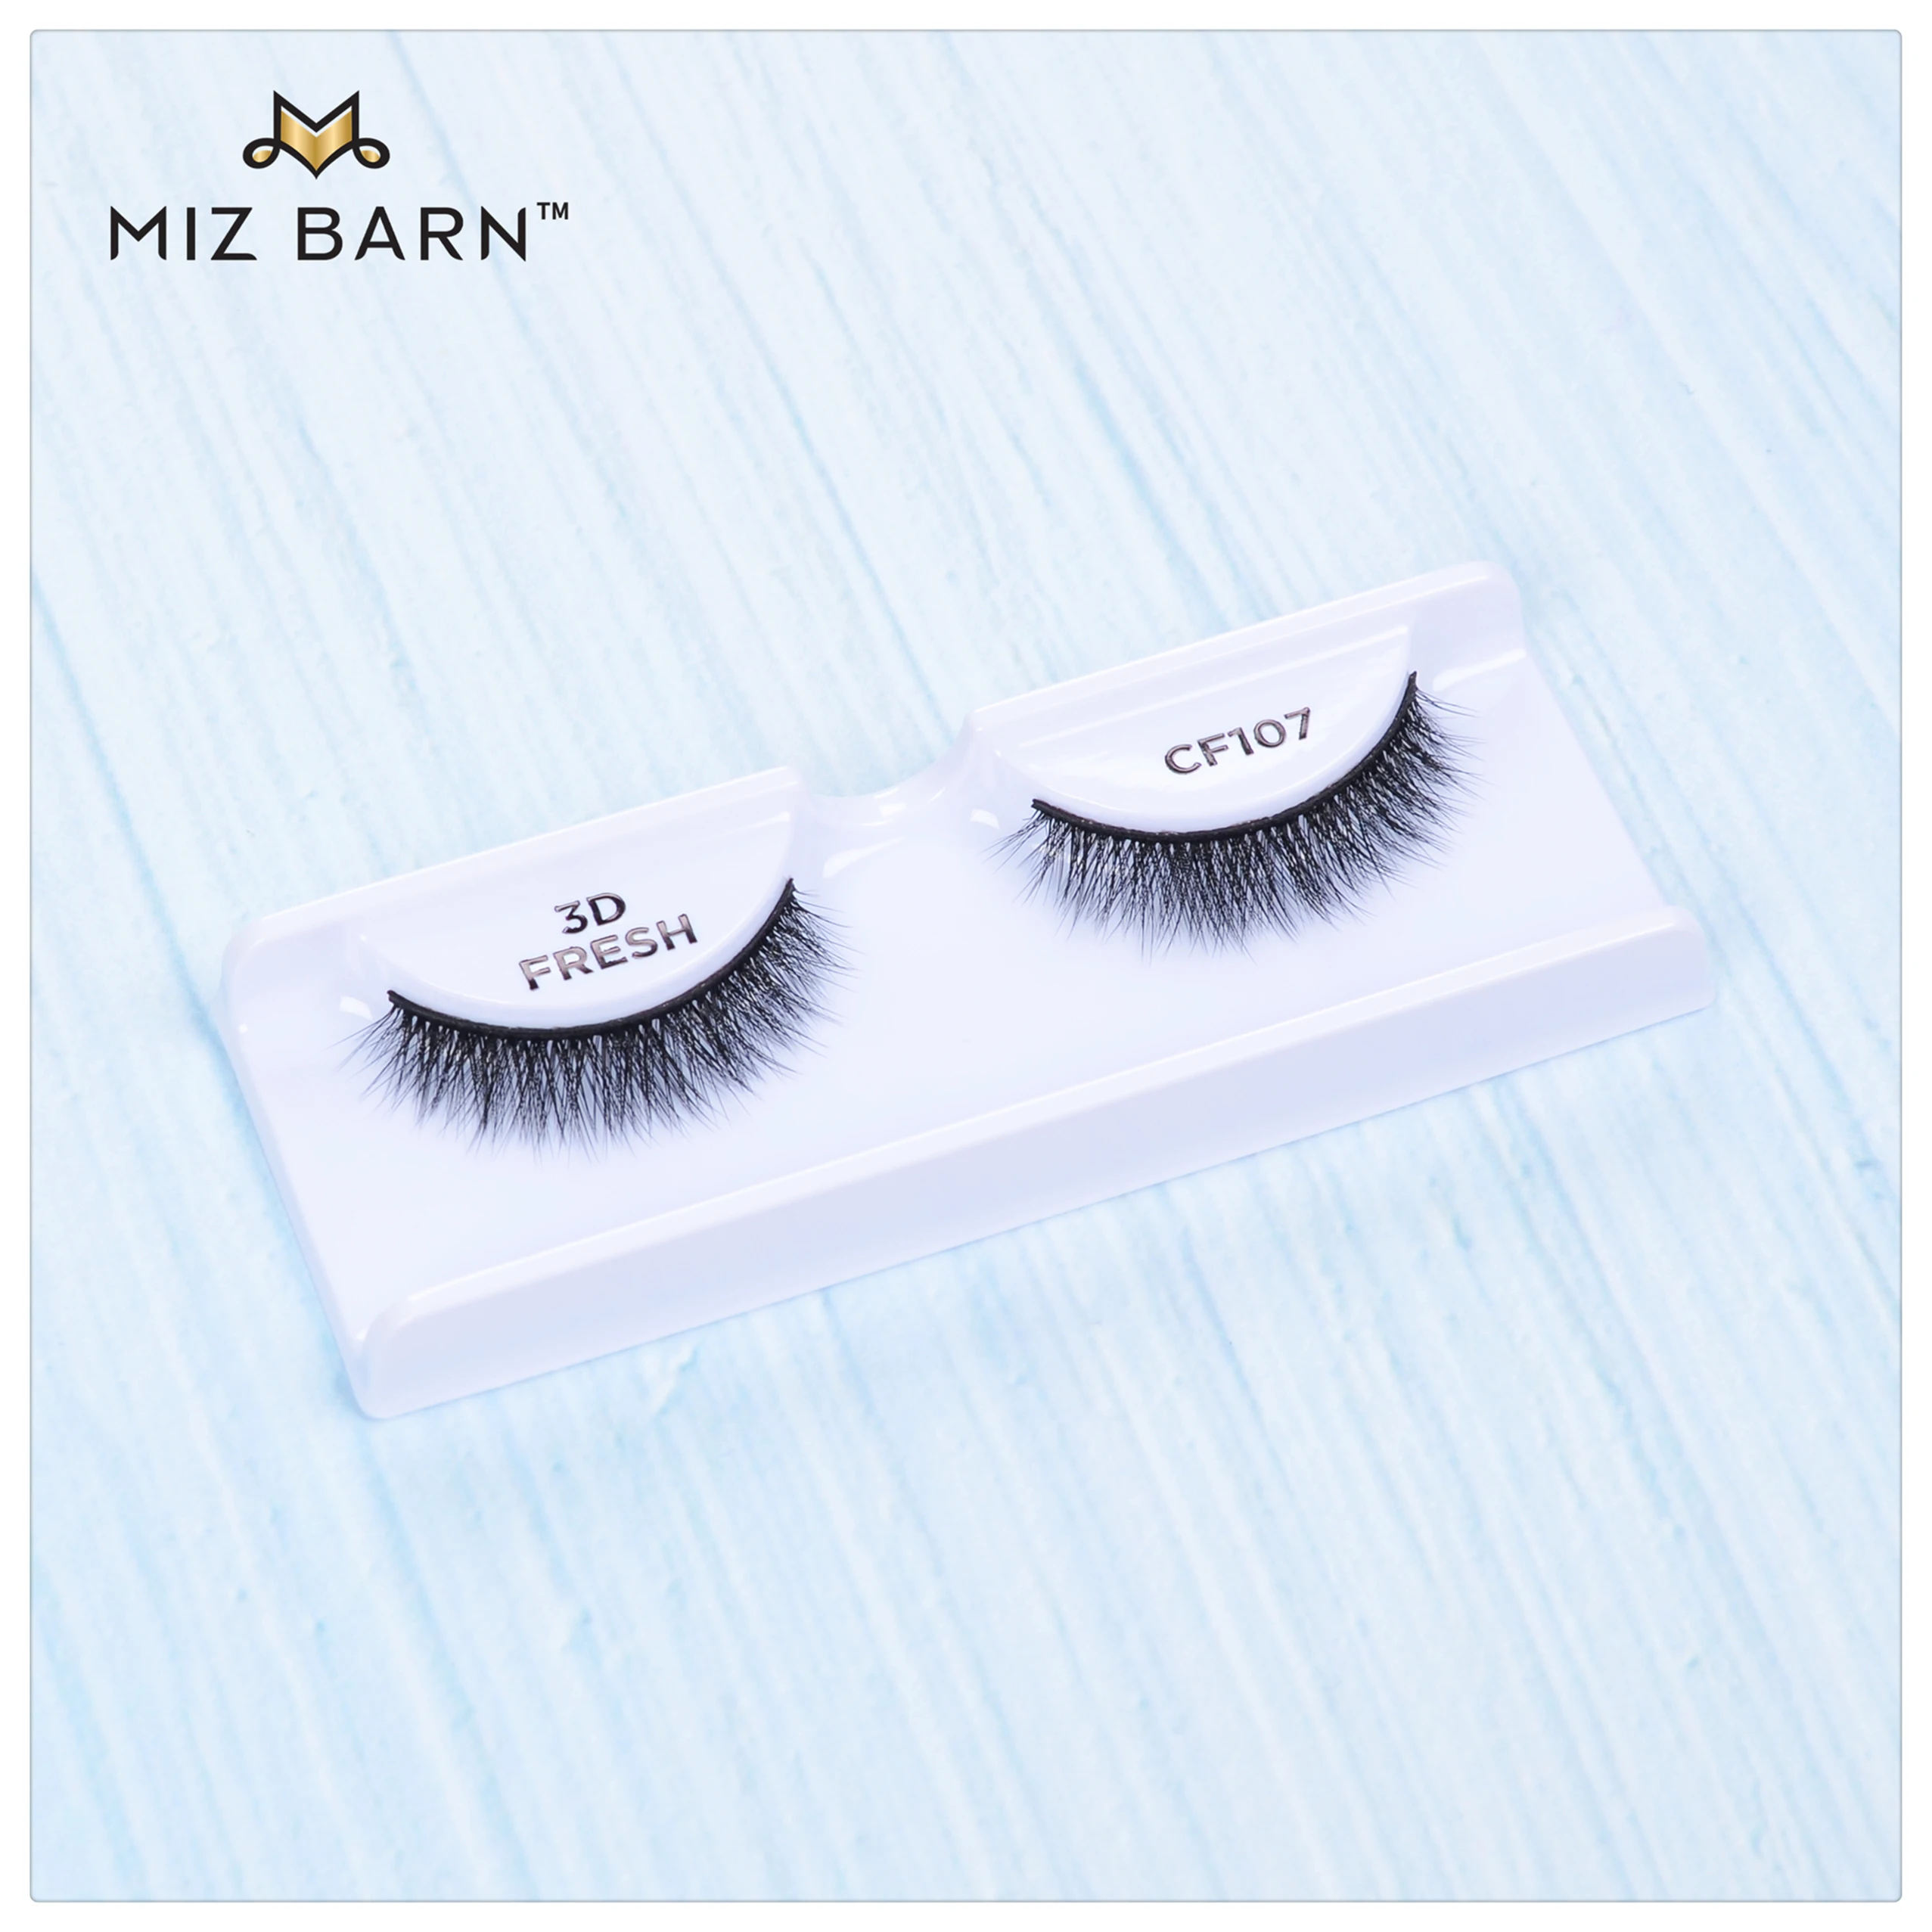 

MIZ BARN 3D CASHMERE-CF107 Eyelashes Natural Soft Eye Makeup Lashes Short Fluffy Handmade Faux Mink Eyelash Reusable Volume Lash